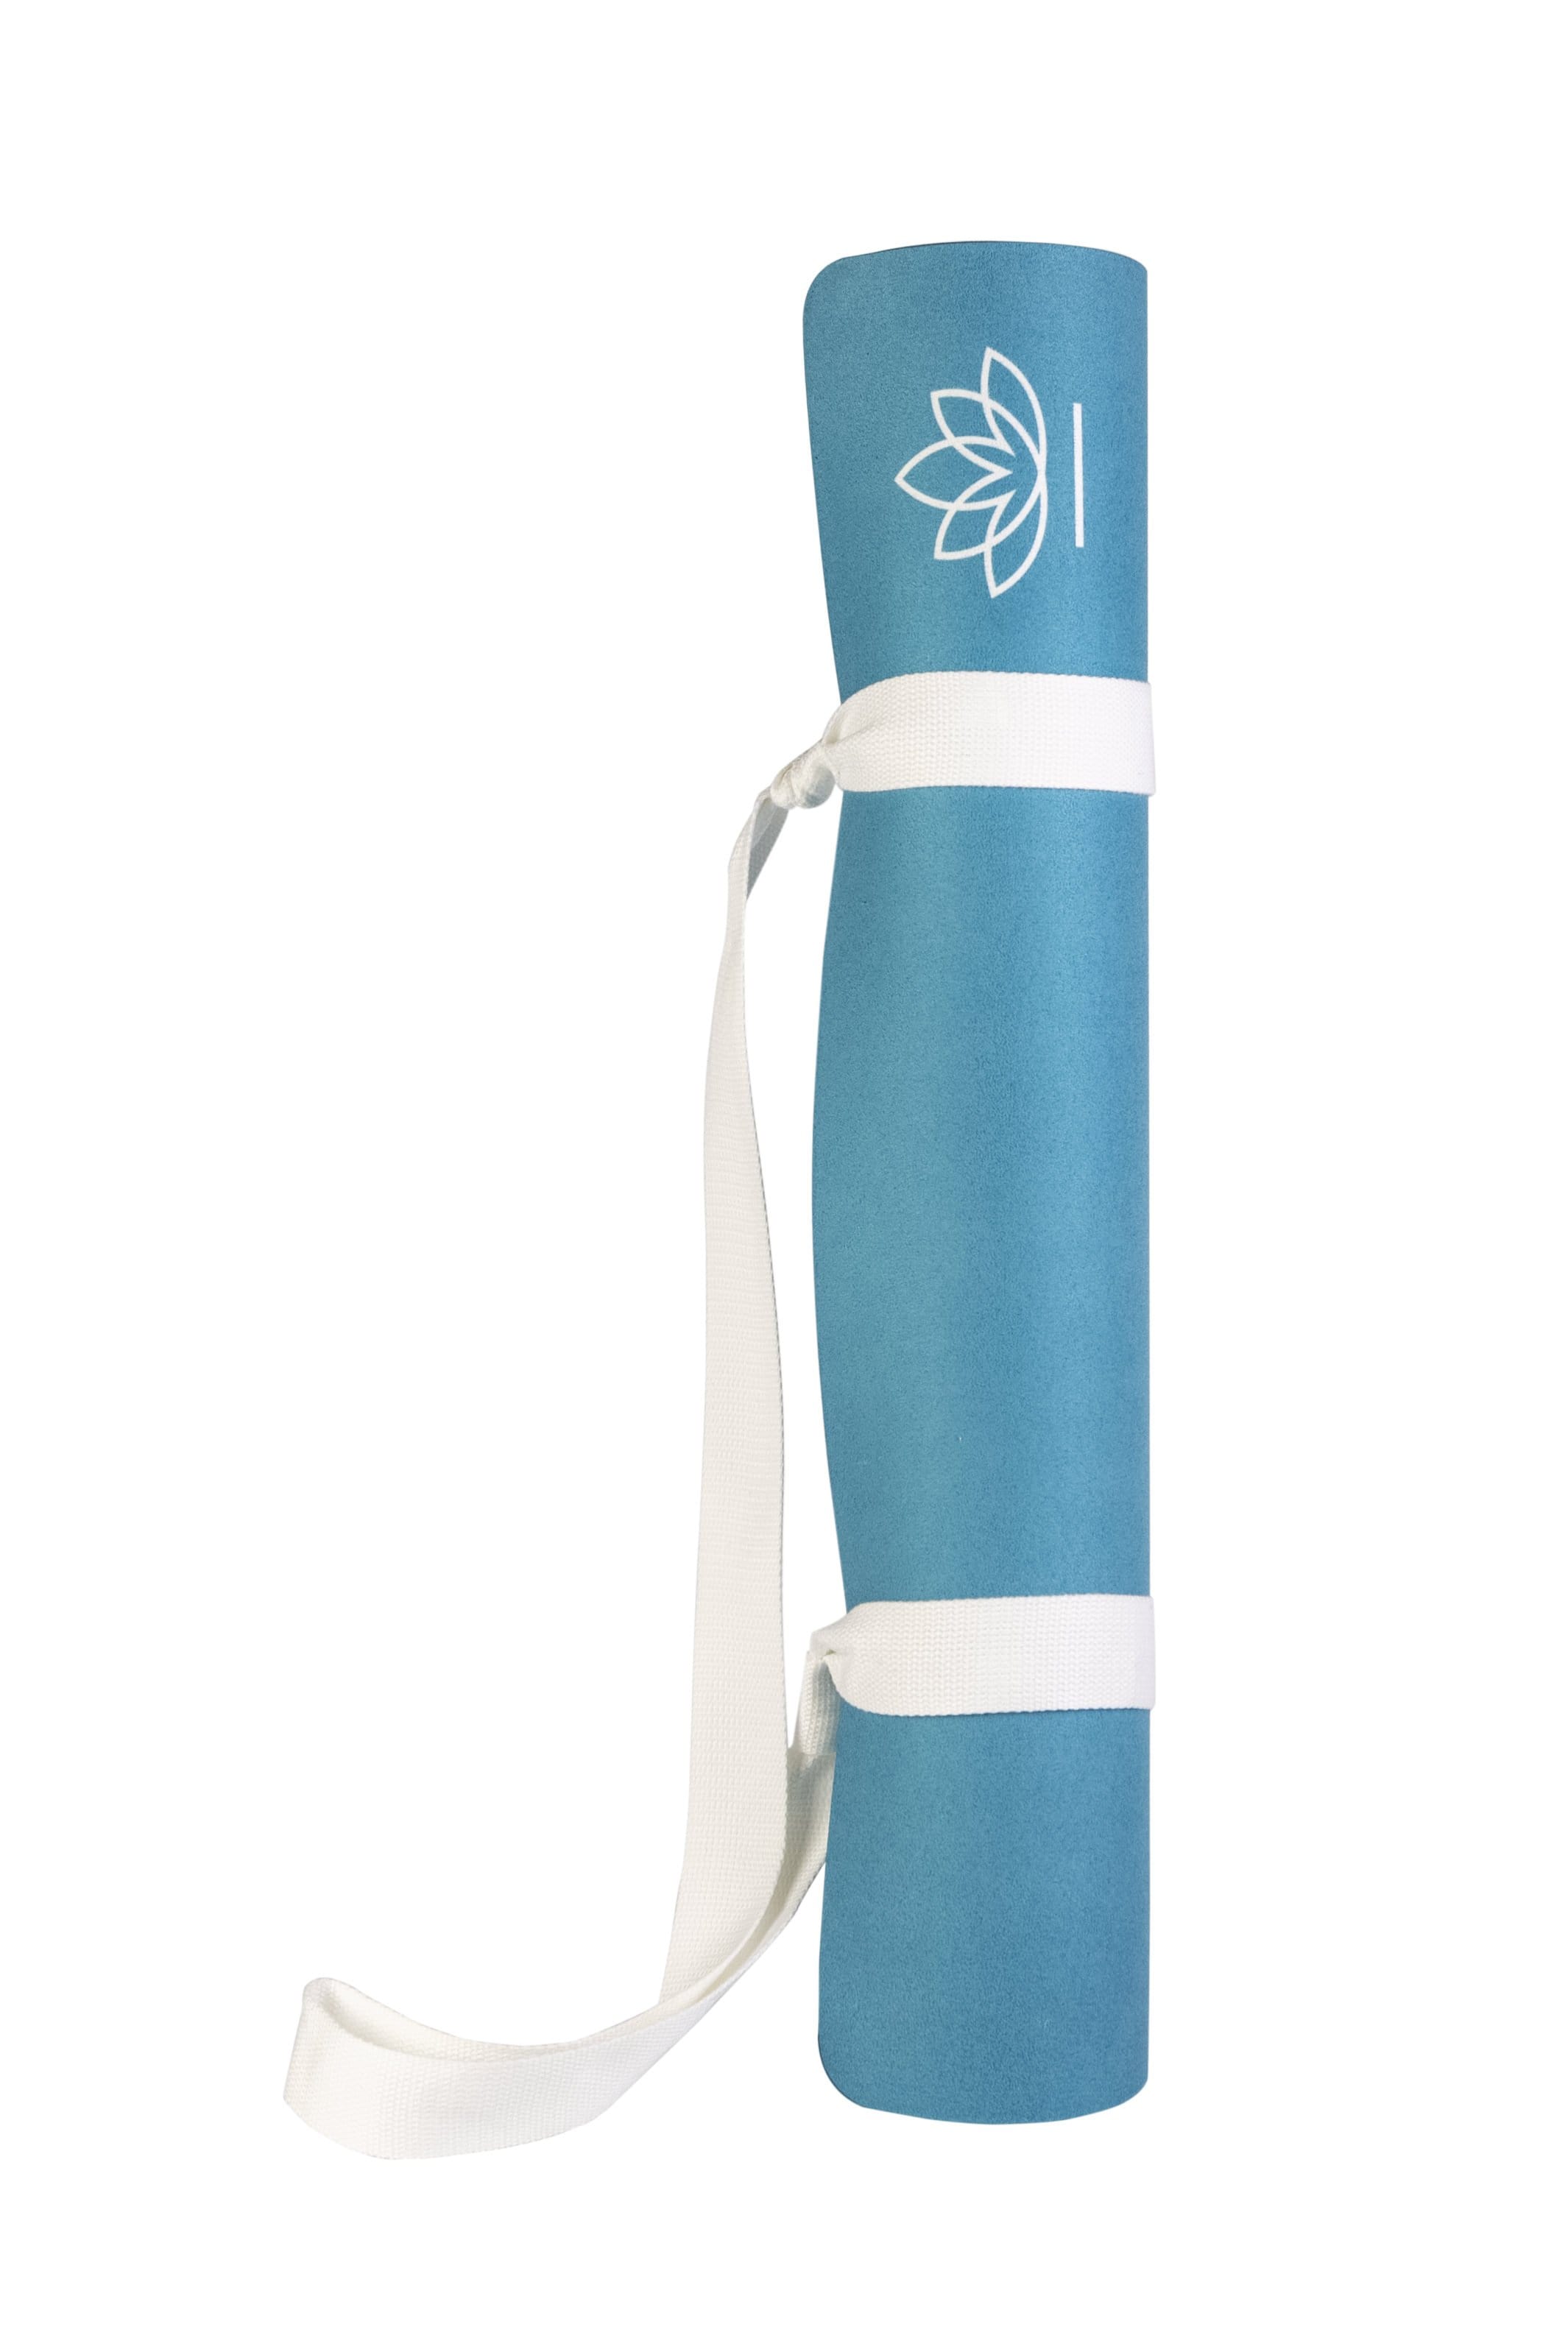 Apheleia Blue - 3mm Luxury Yoga Mat